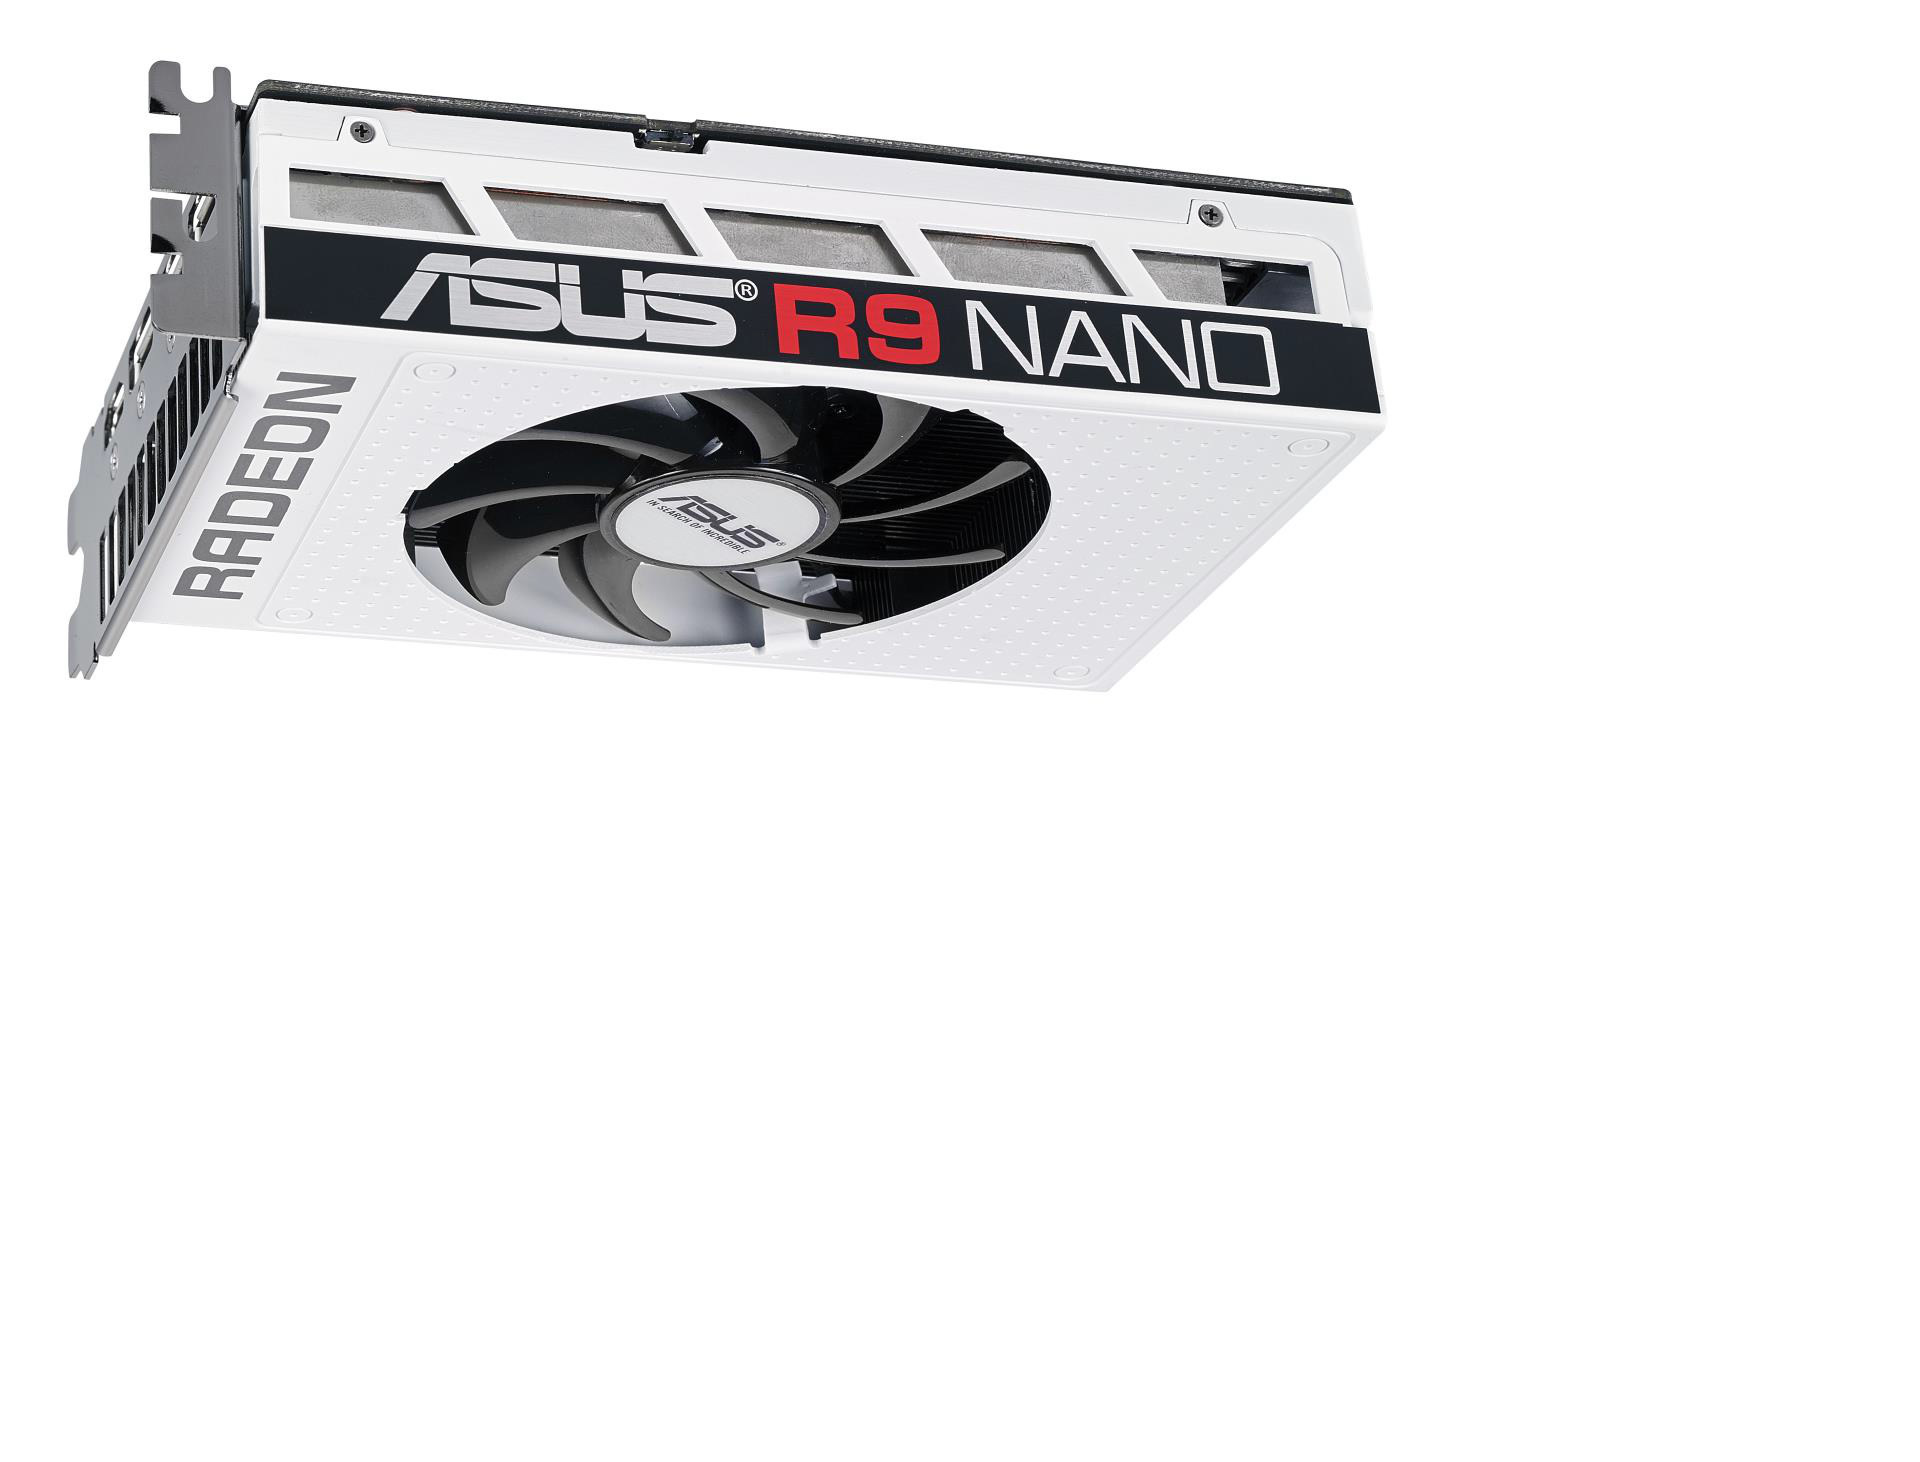 ASUS-R9-NANO-White-Edition-with-ASUS-AMD-NANO-Logo